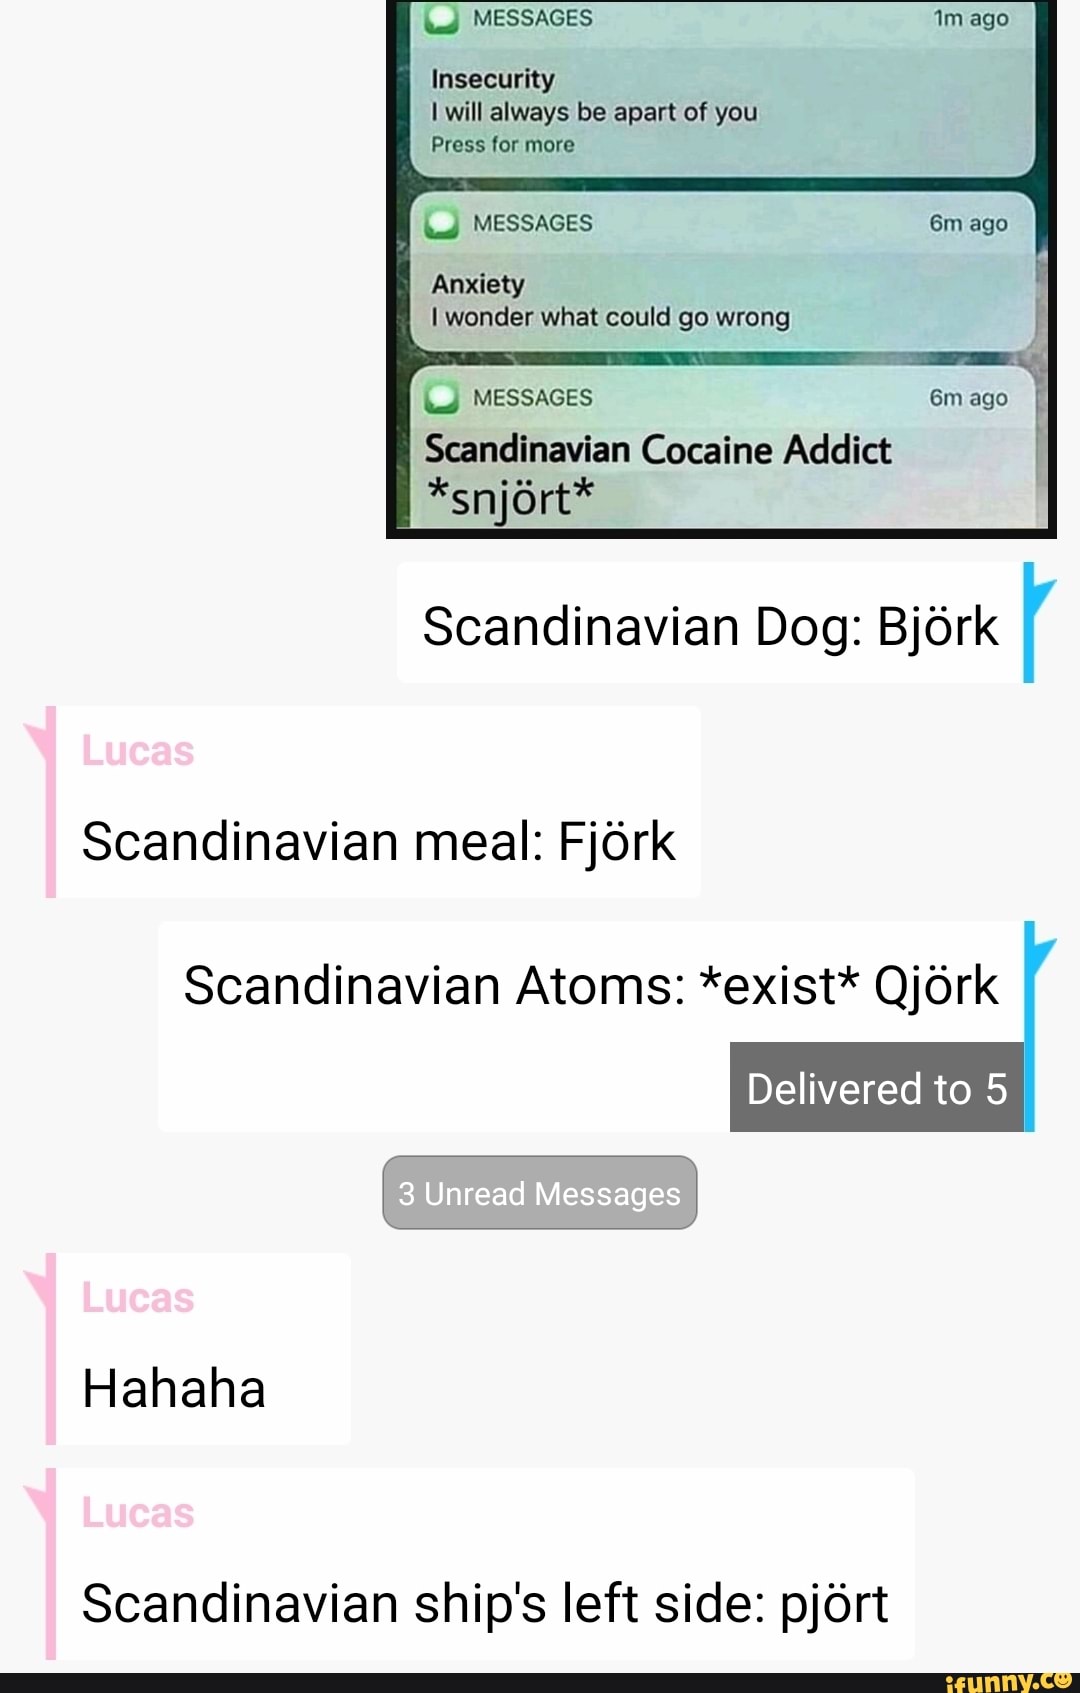 The Scandinavian Addiction